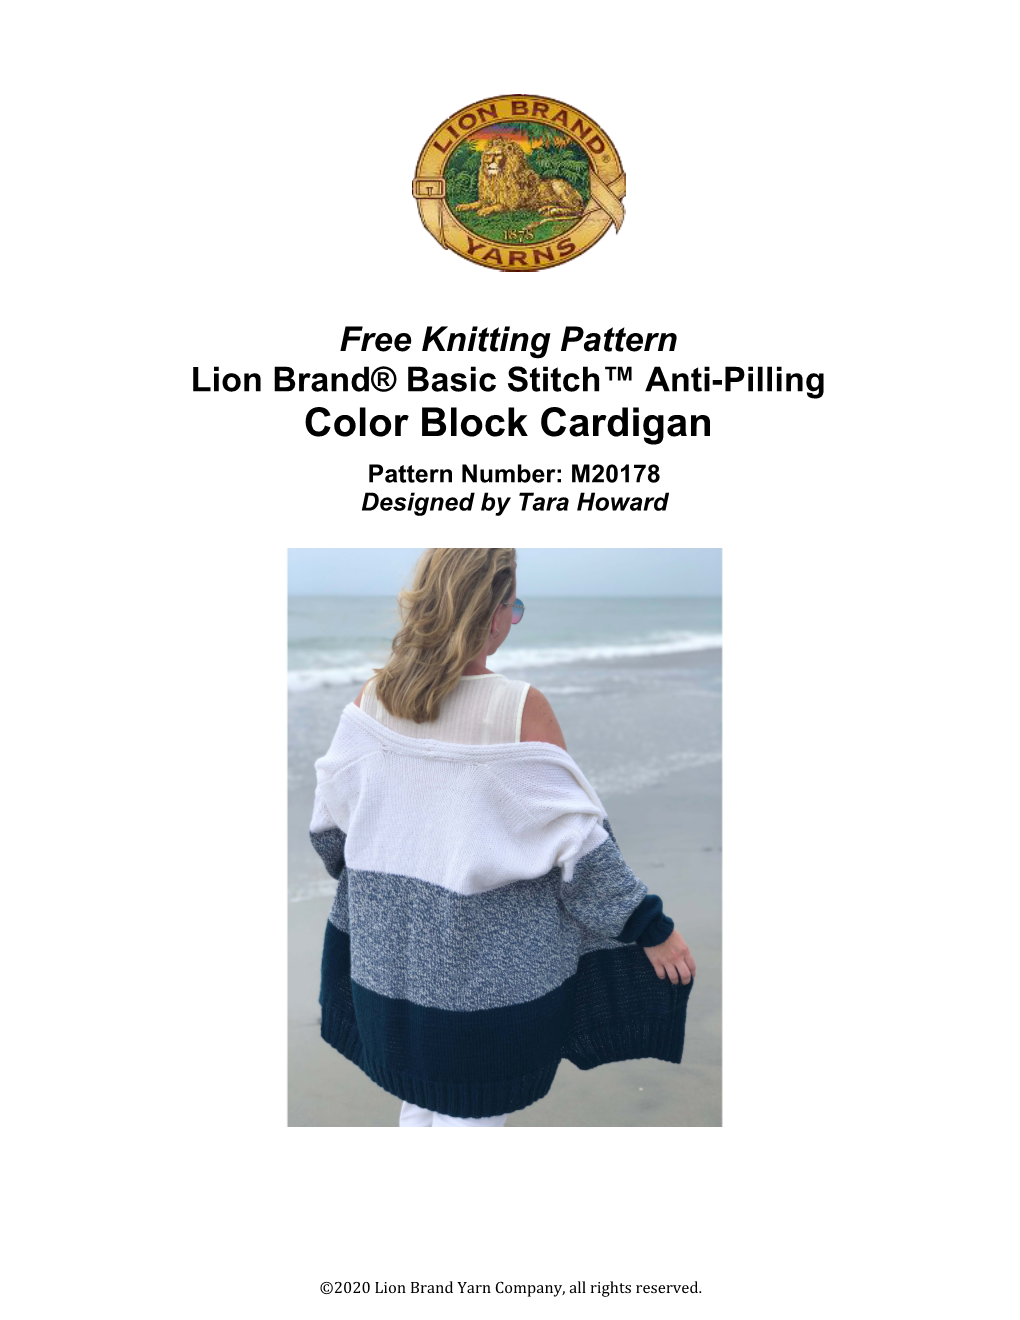 Free Knitting Pattern Lion Brand® Basic Stitch™ Anti-Pilling Color Block Cardigan Pattern Number: M20178 Designed by Tara Howard